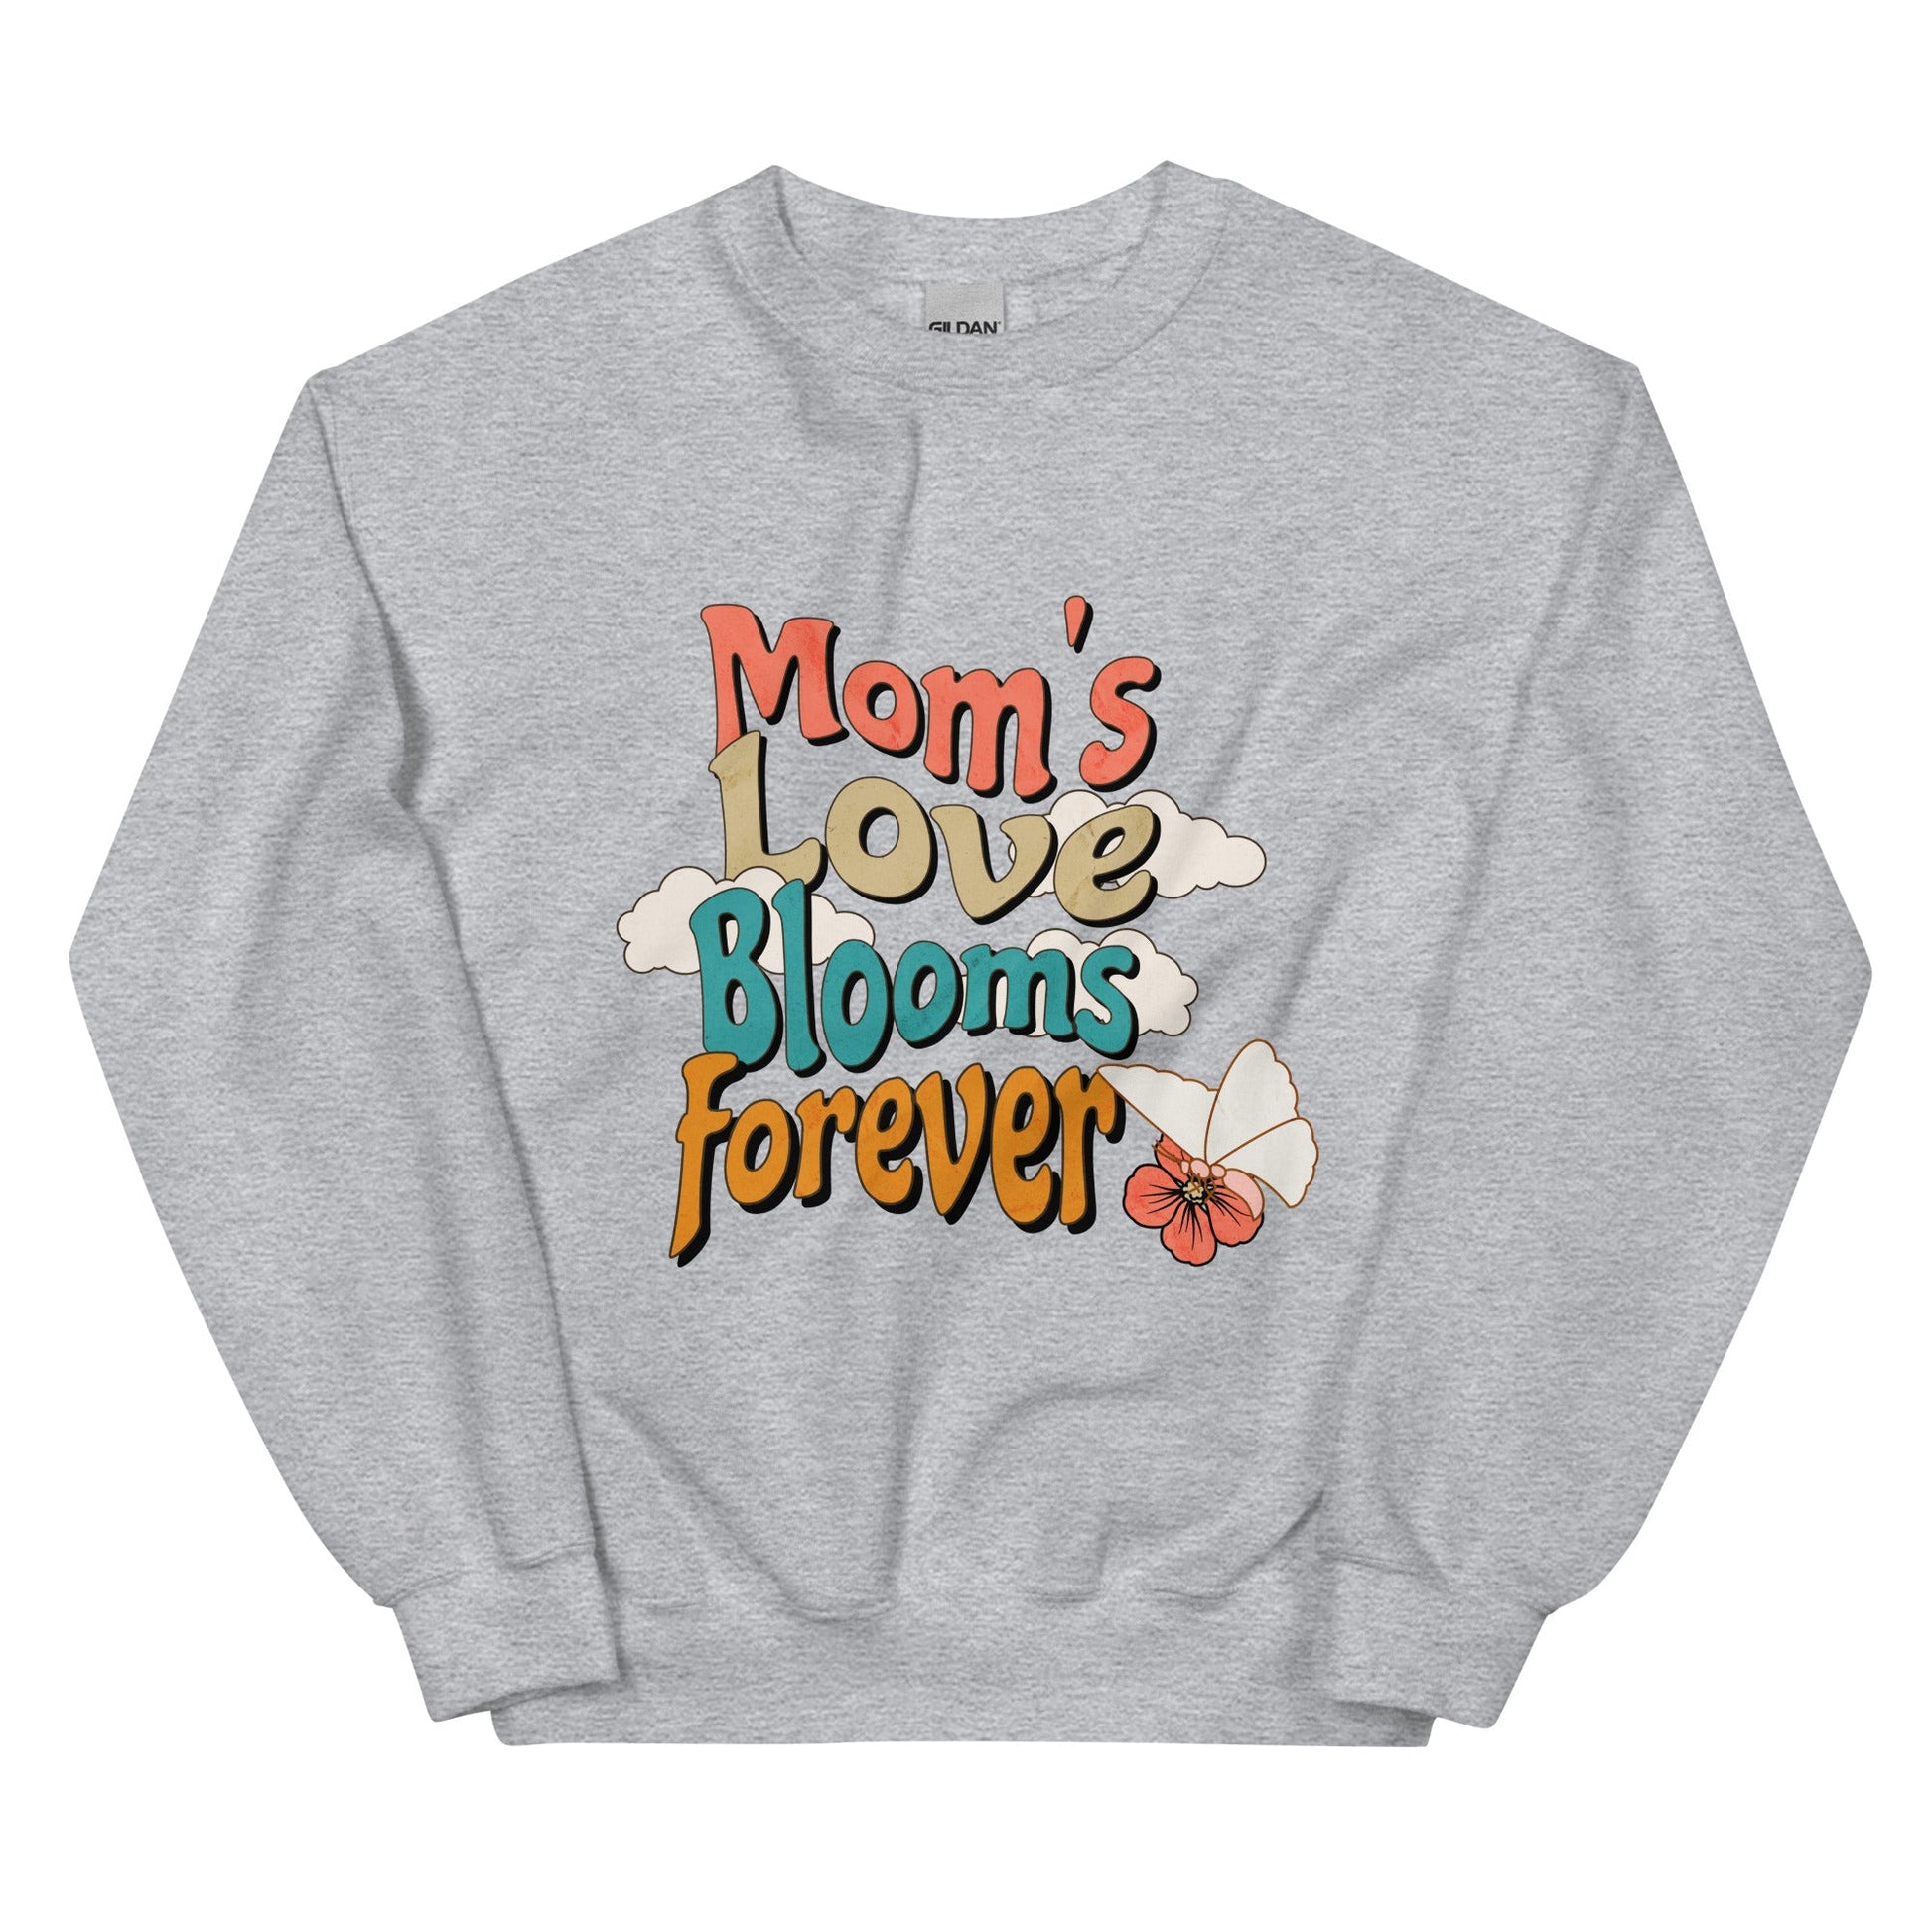 Mom's Love Blooms Forever Crewneck Sweatshirt-crewneck-Sport Grey-S-mysticalcherry